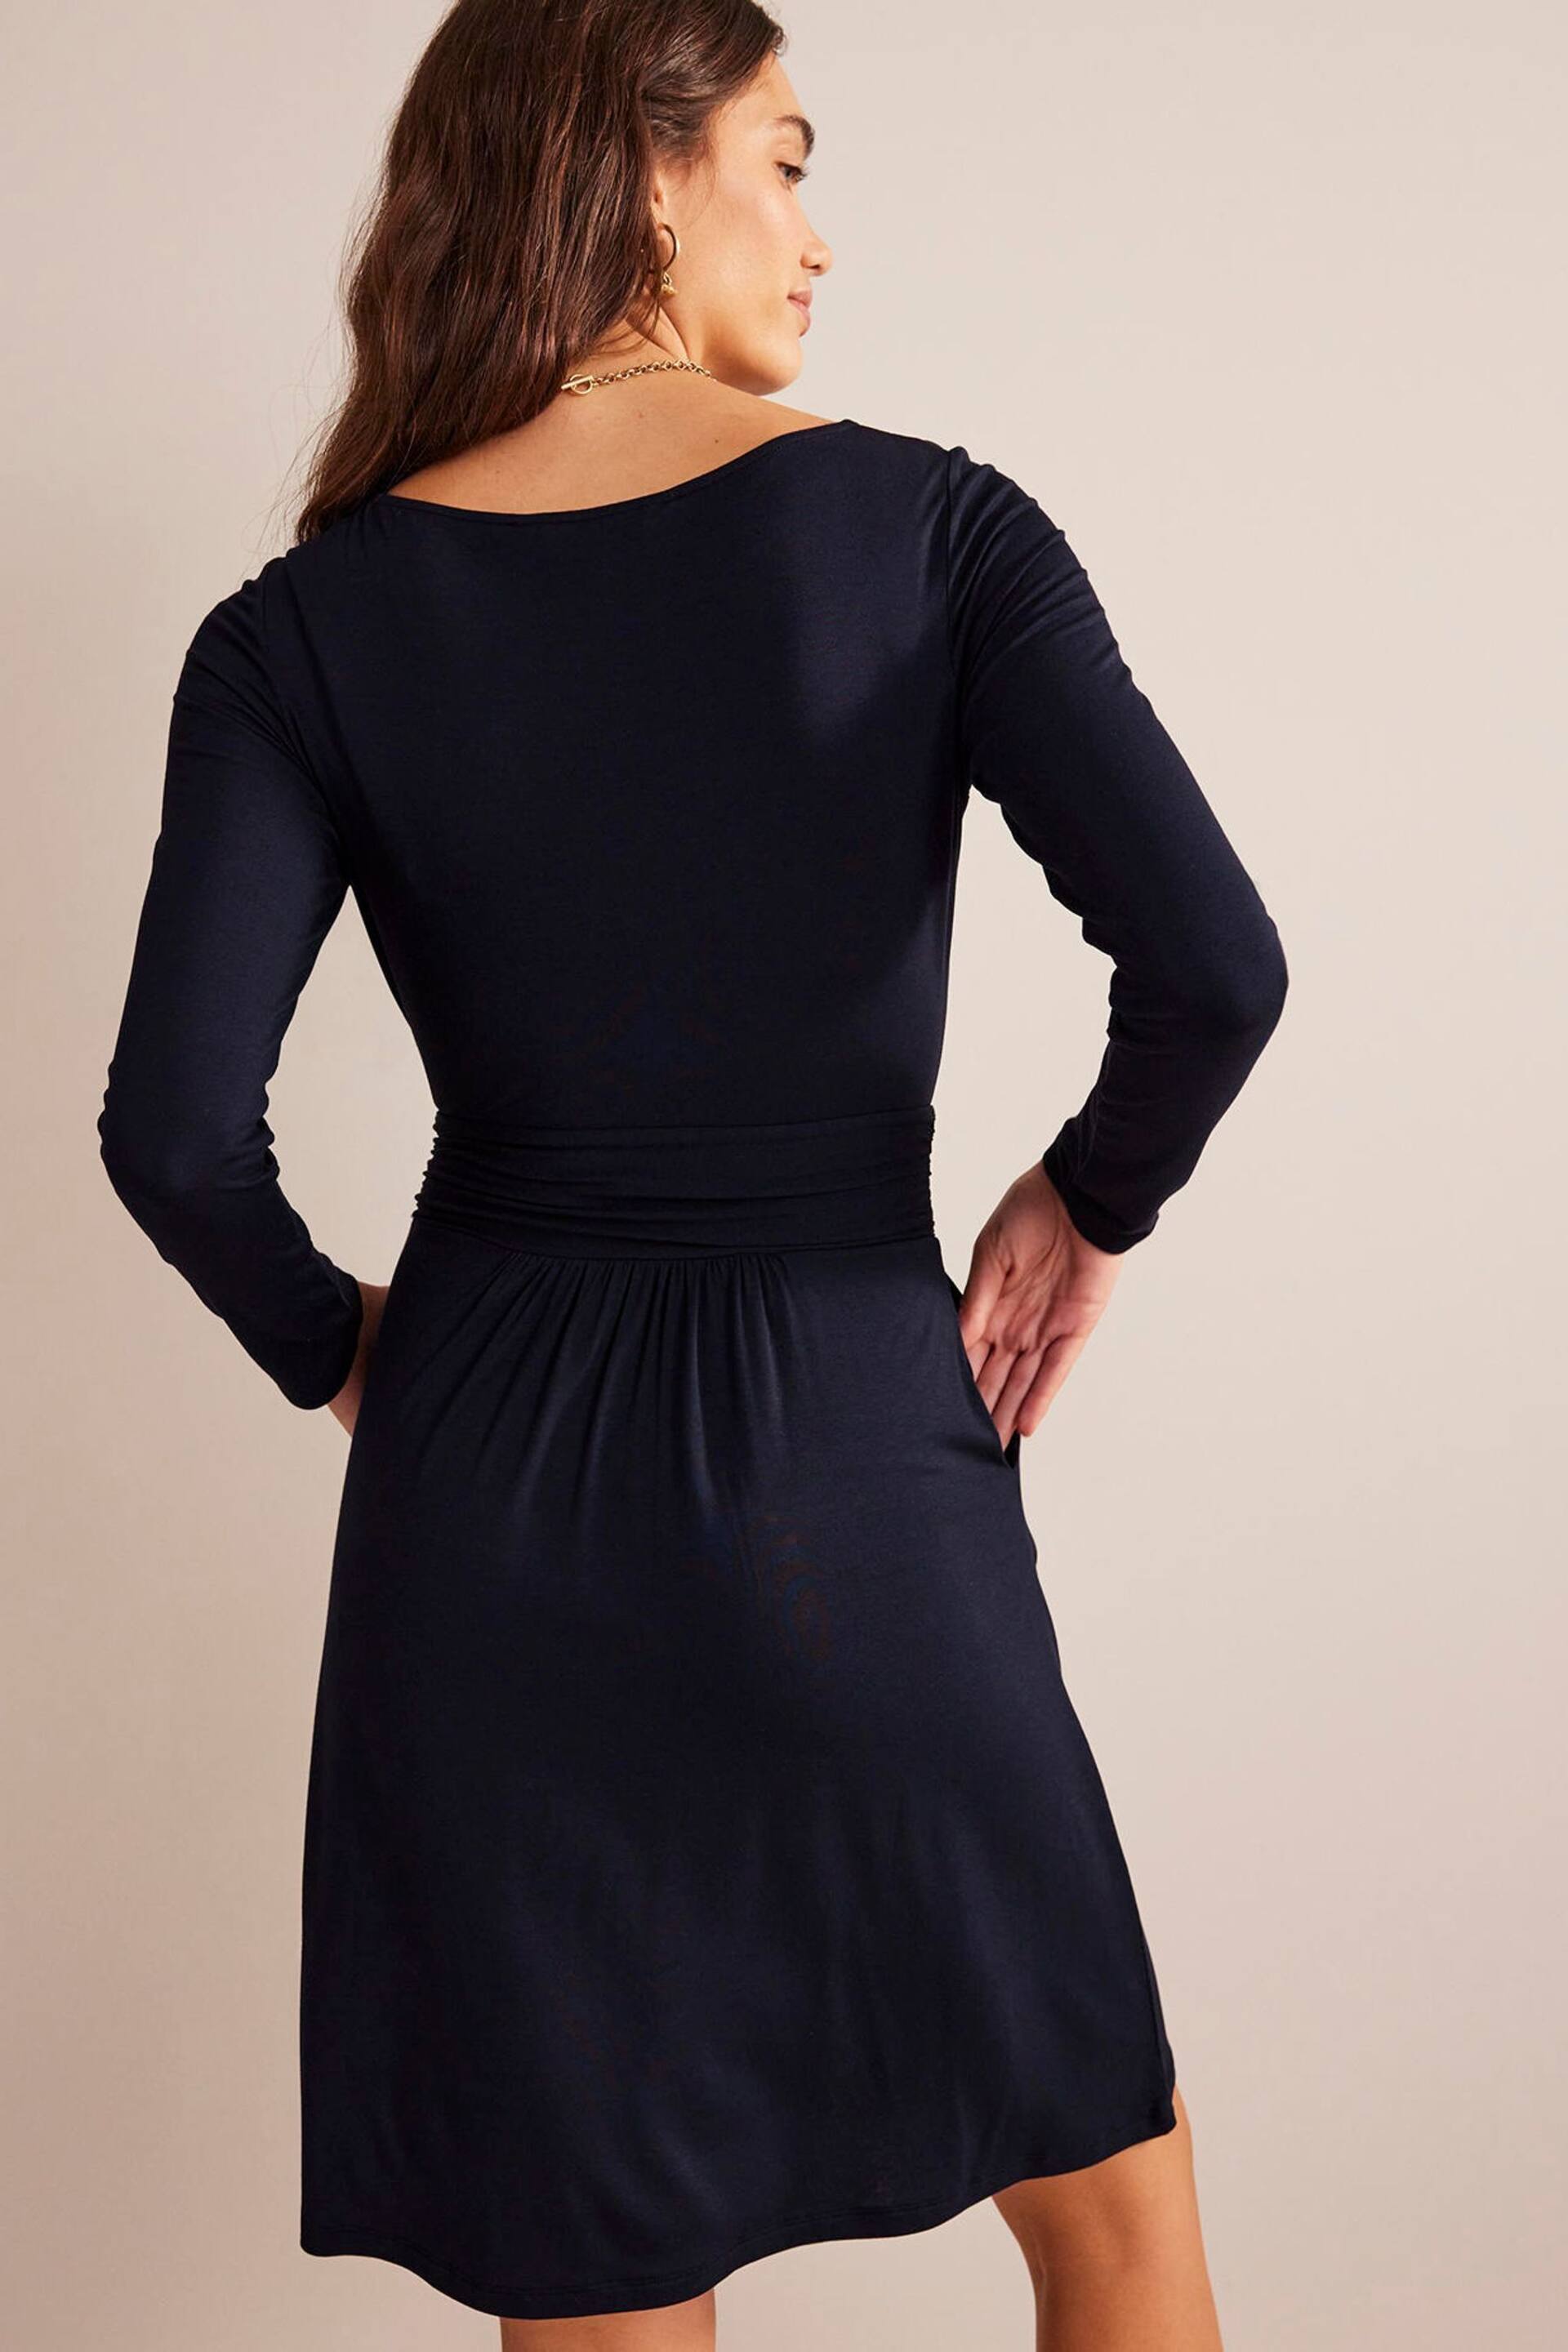 Boden Navy Blue Abigail Jersey Dress - Image 2 of 5